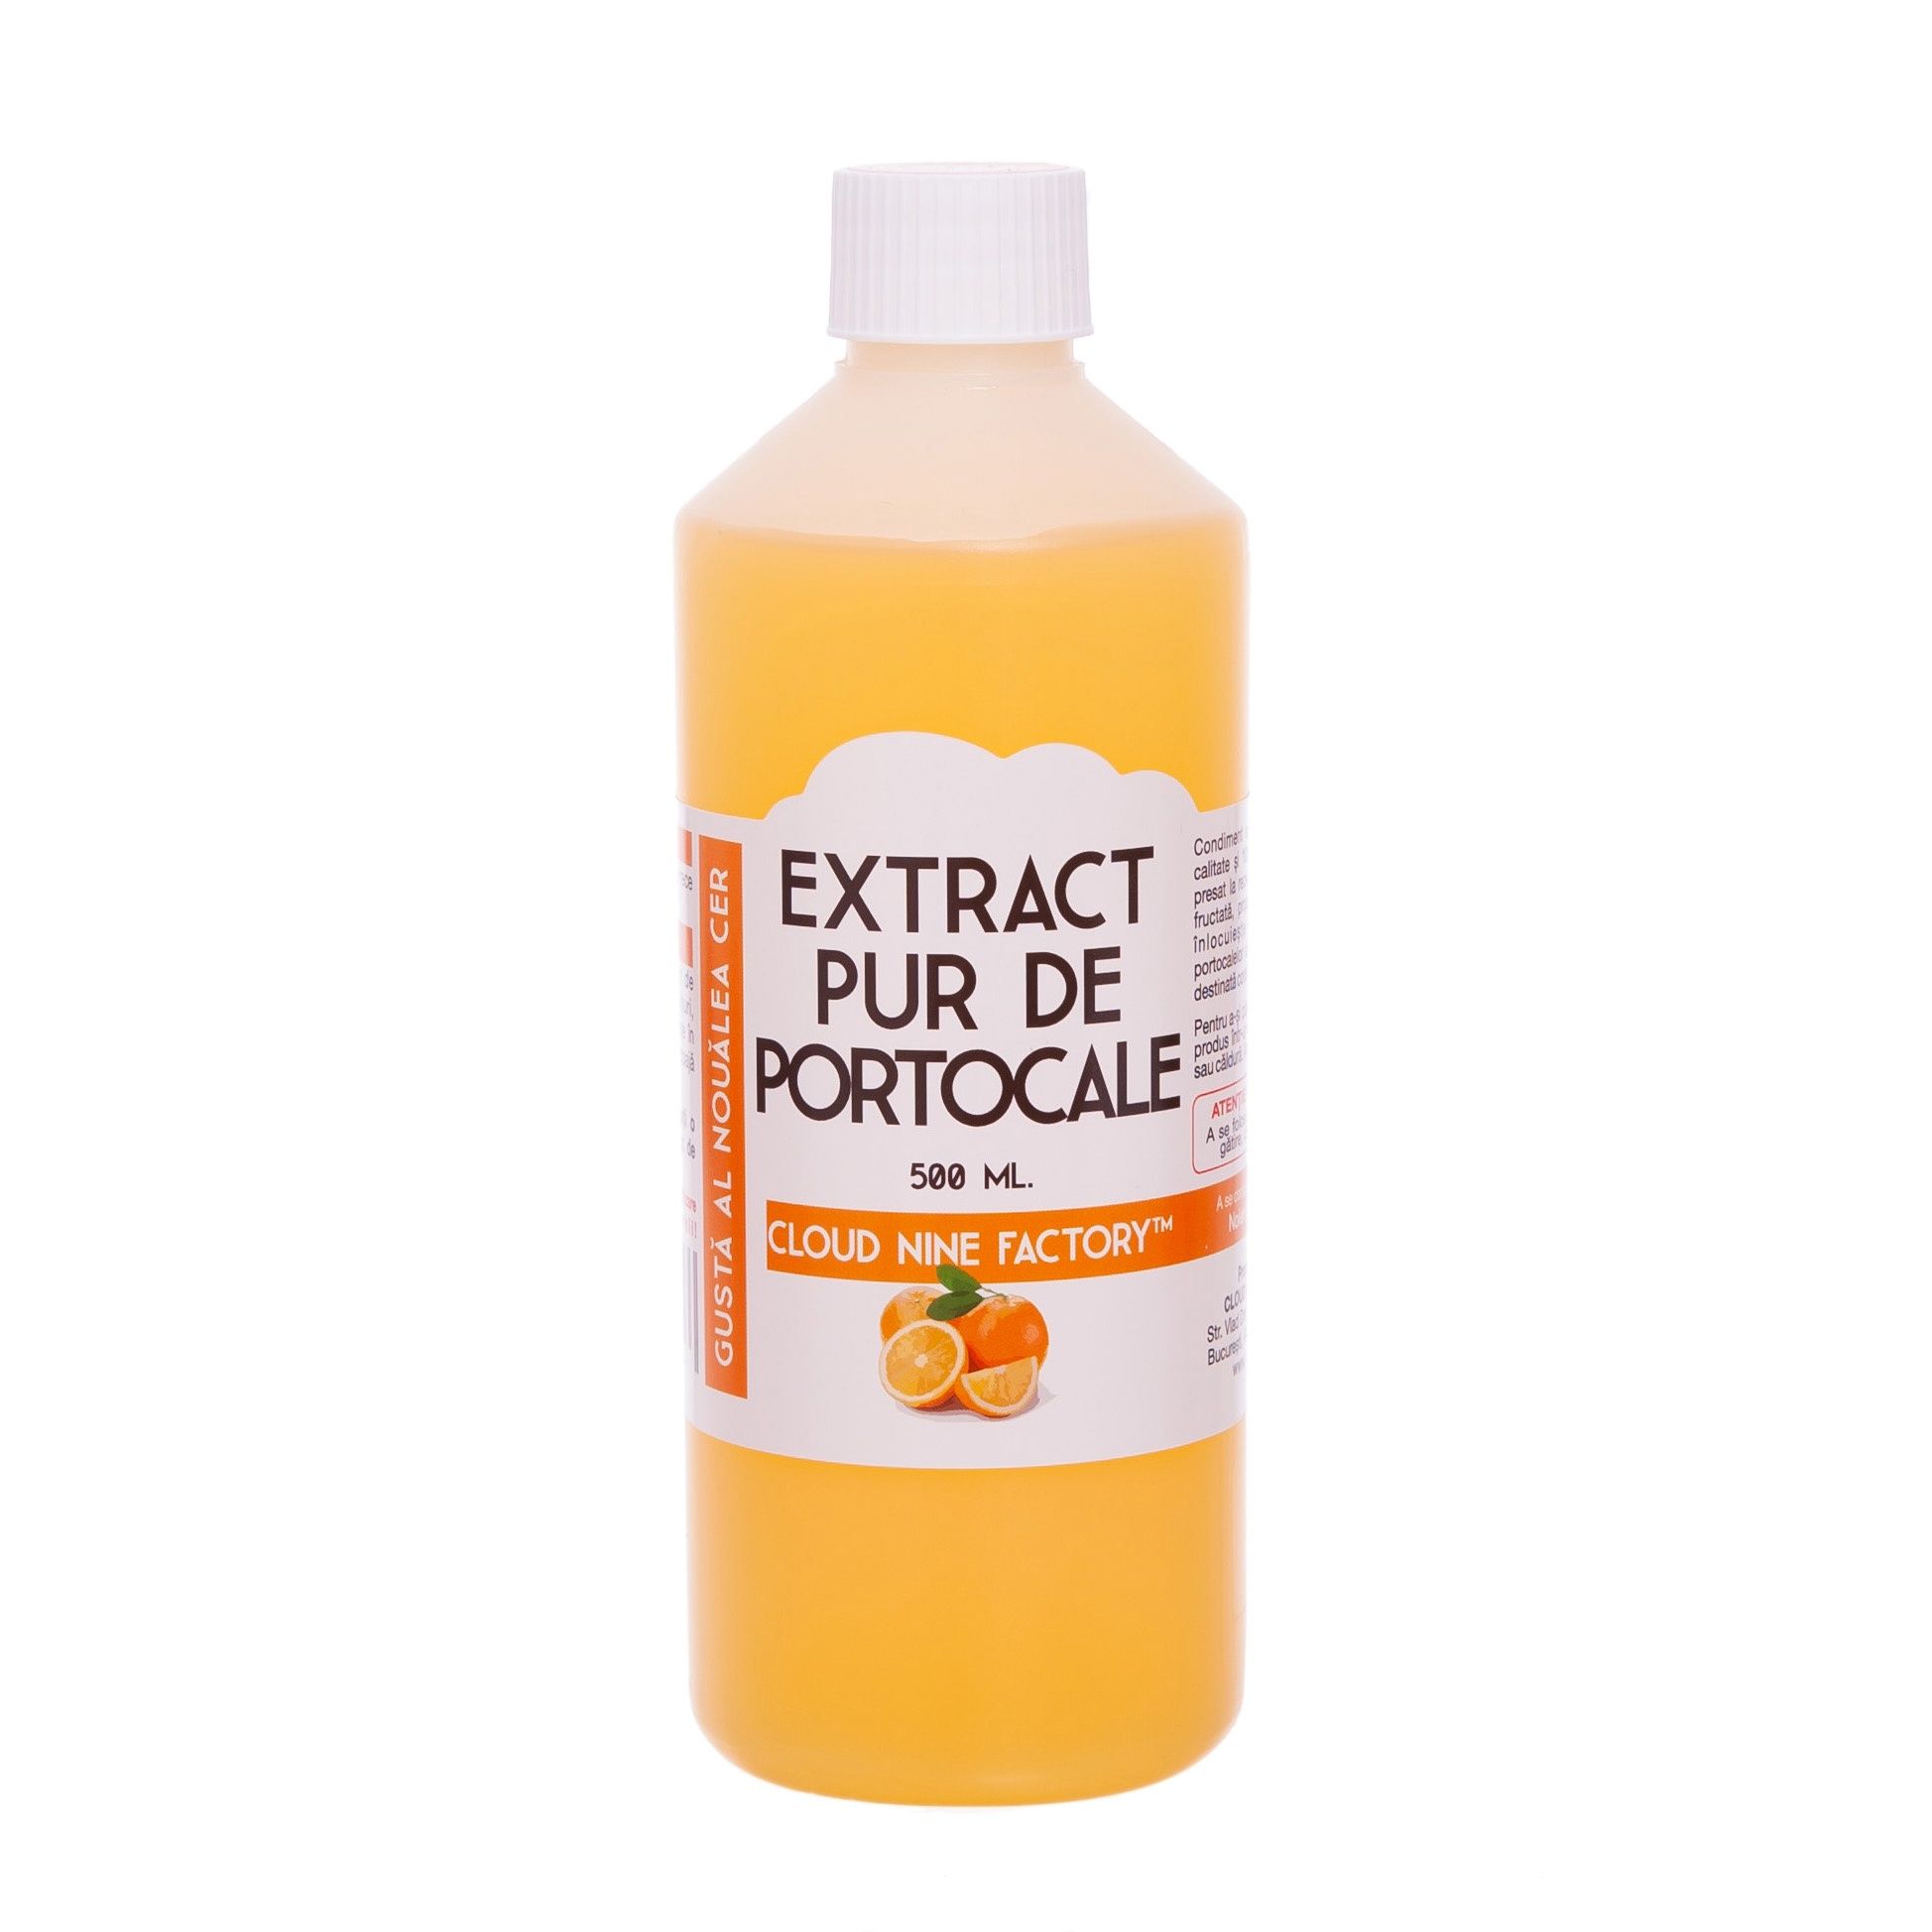 Extract Pur de Portocale (500 ml.) extract pur de portocale (500 ml.) - IMG 2641 - Extract Pur de Portocale (500 ml.) cloud nine factory - IMG 2641 - Extract Pur de Portocale